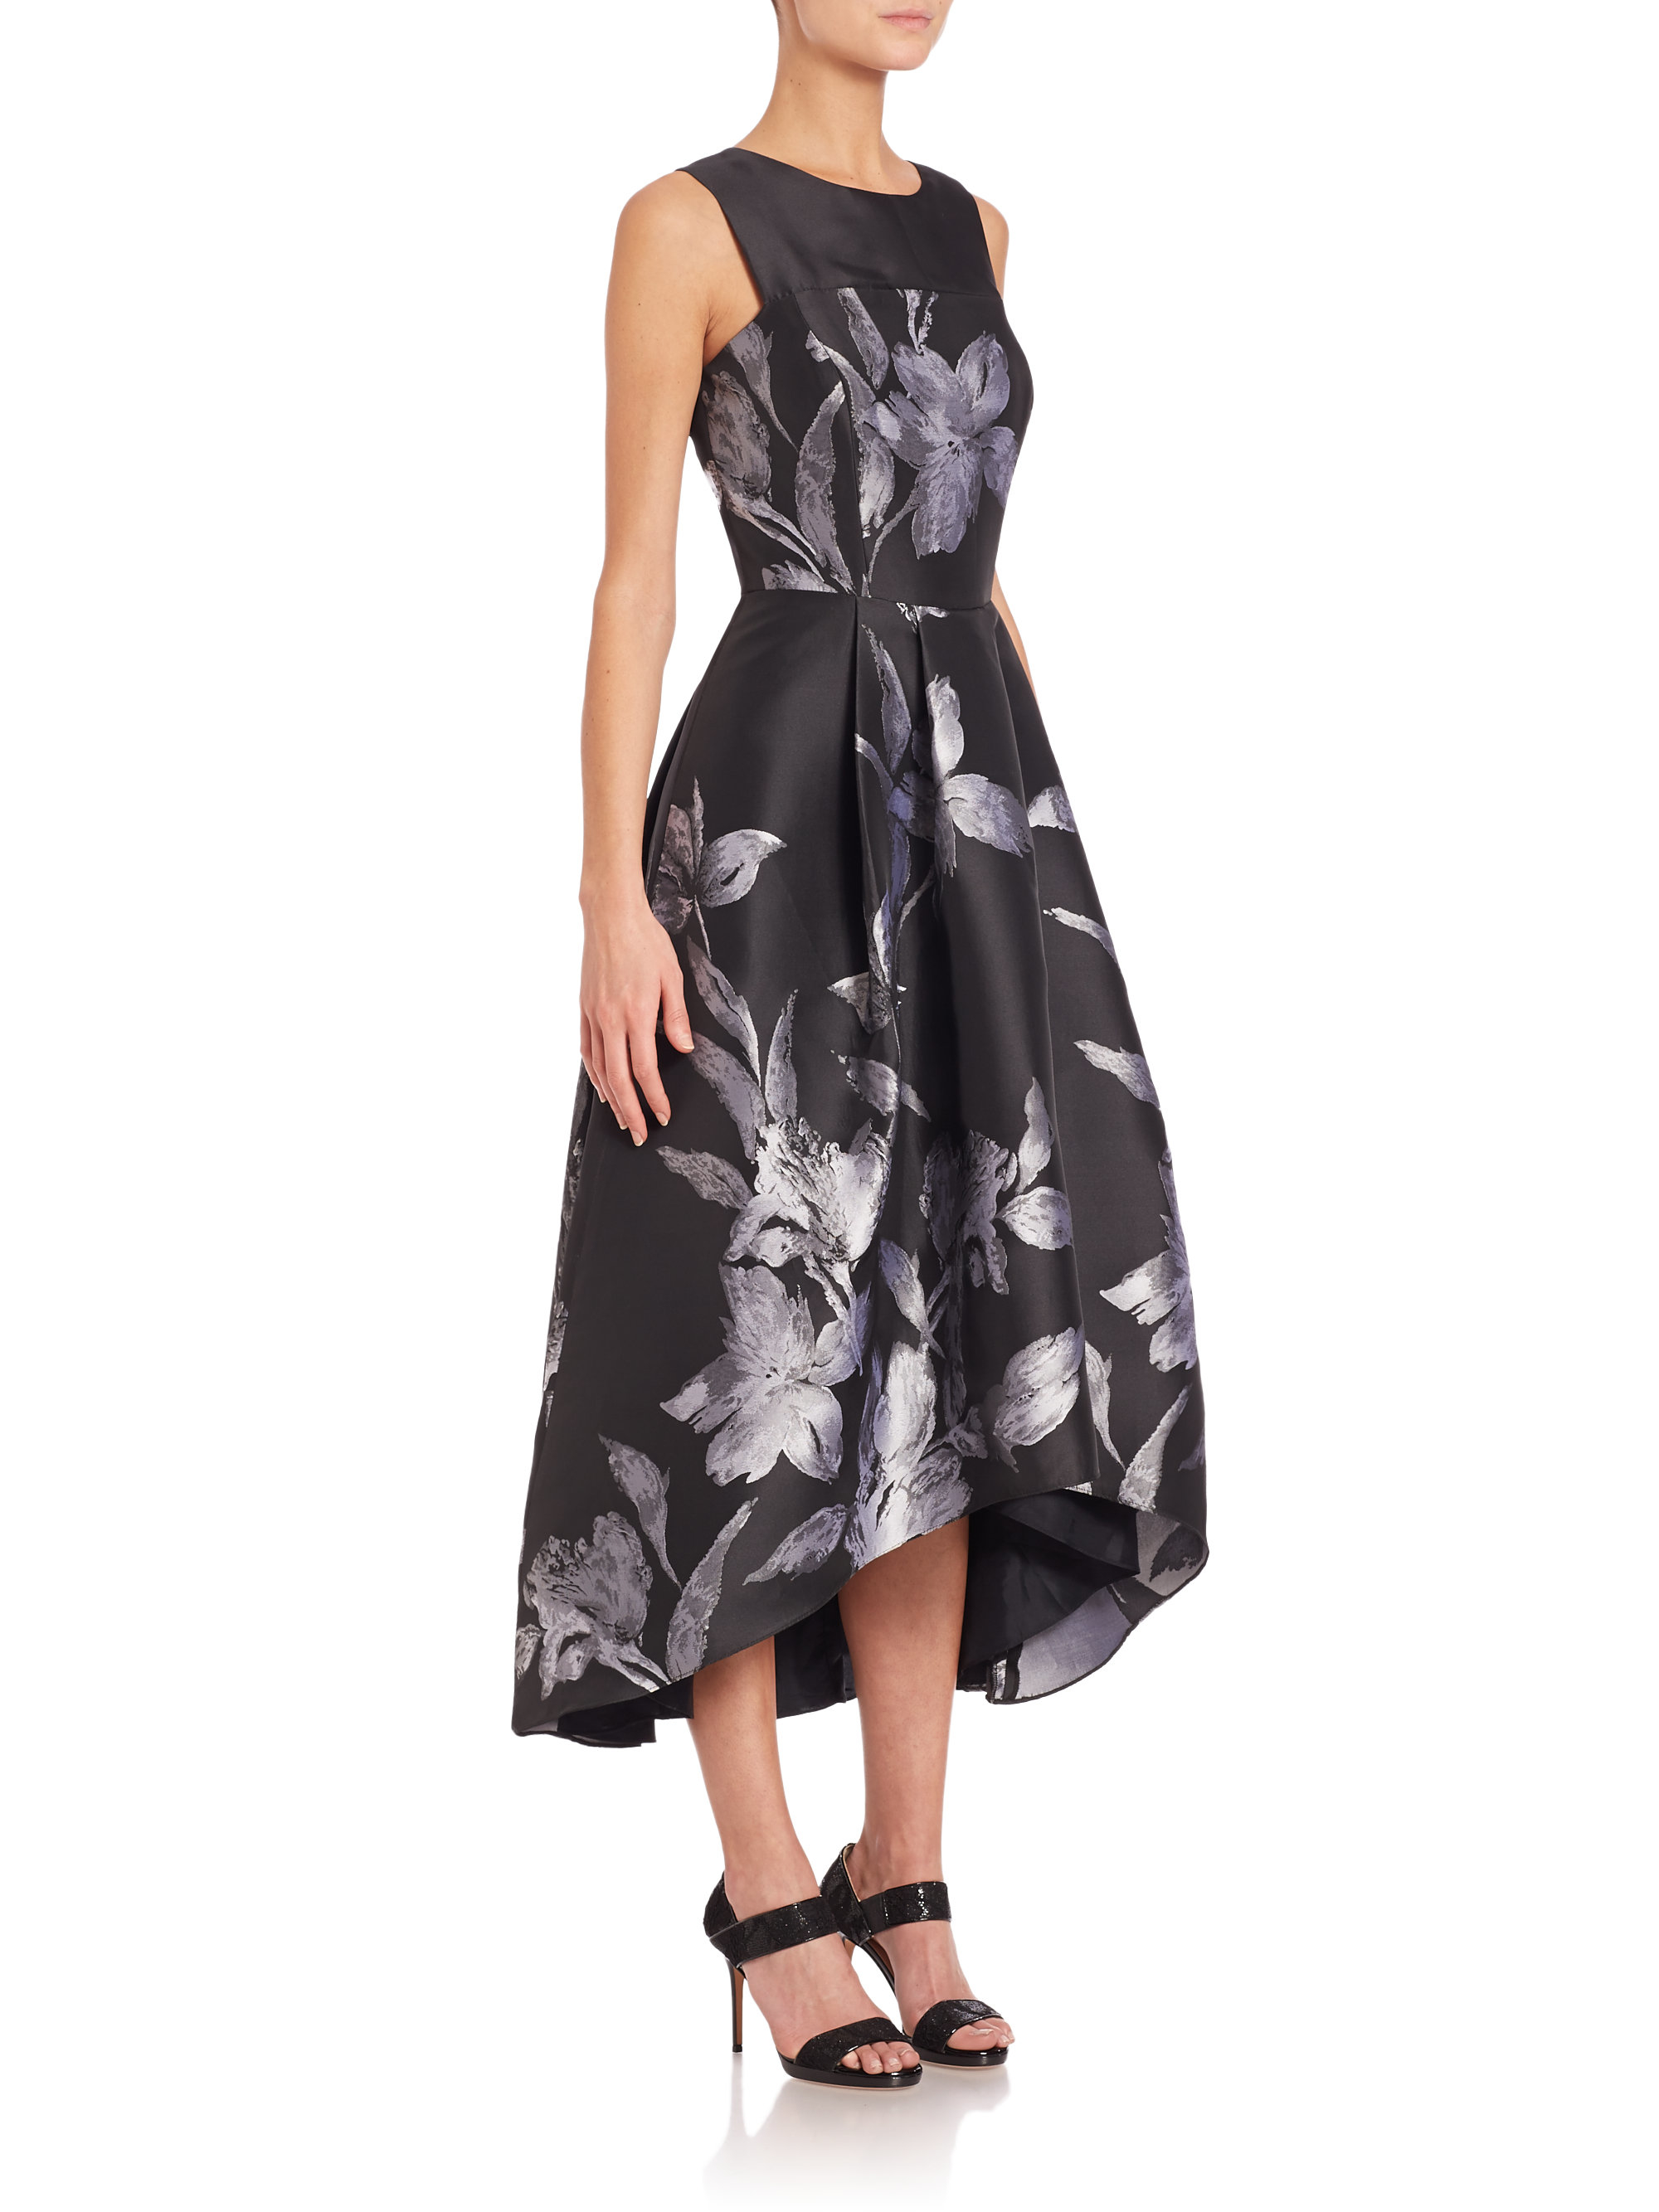 Lyst - Shoshanna Noir Floral Jacquard Coraline Dress in Black